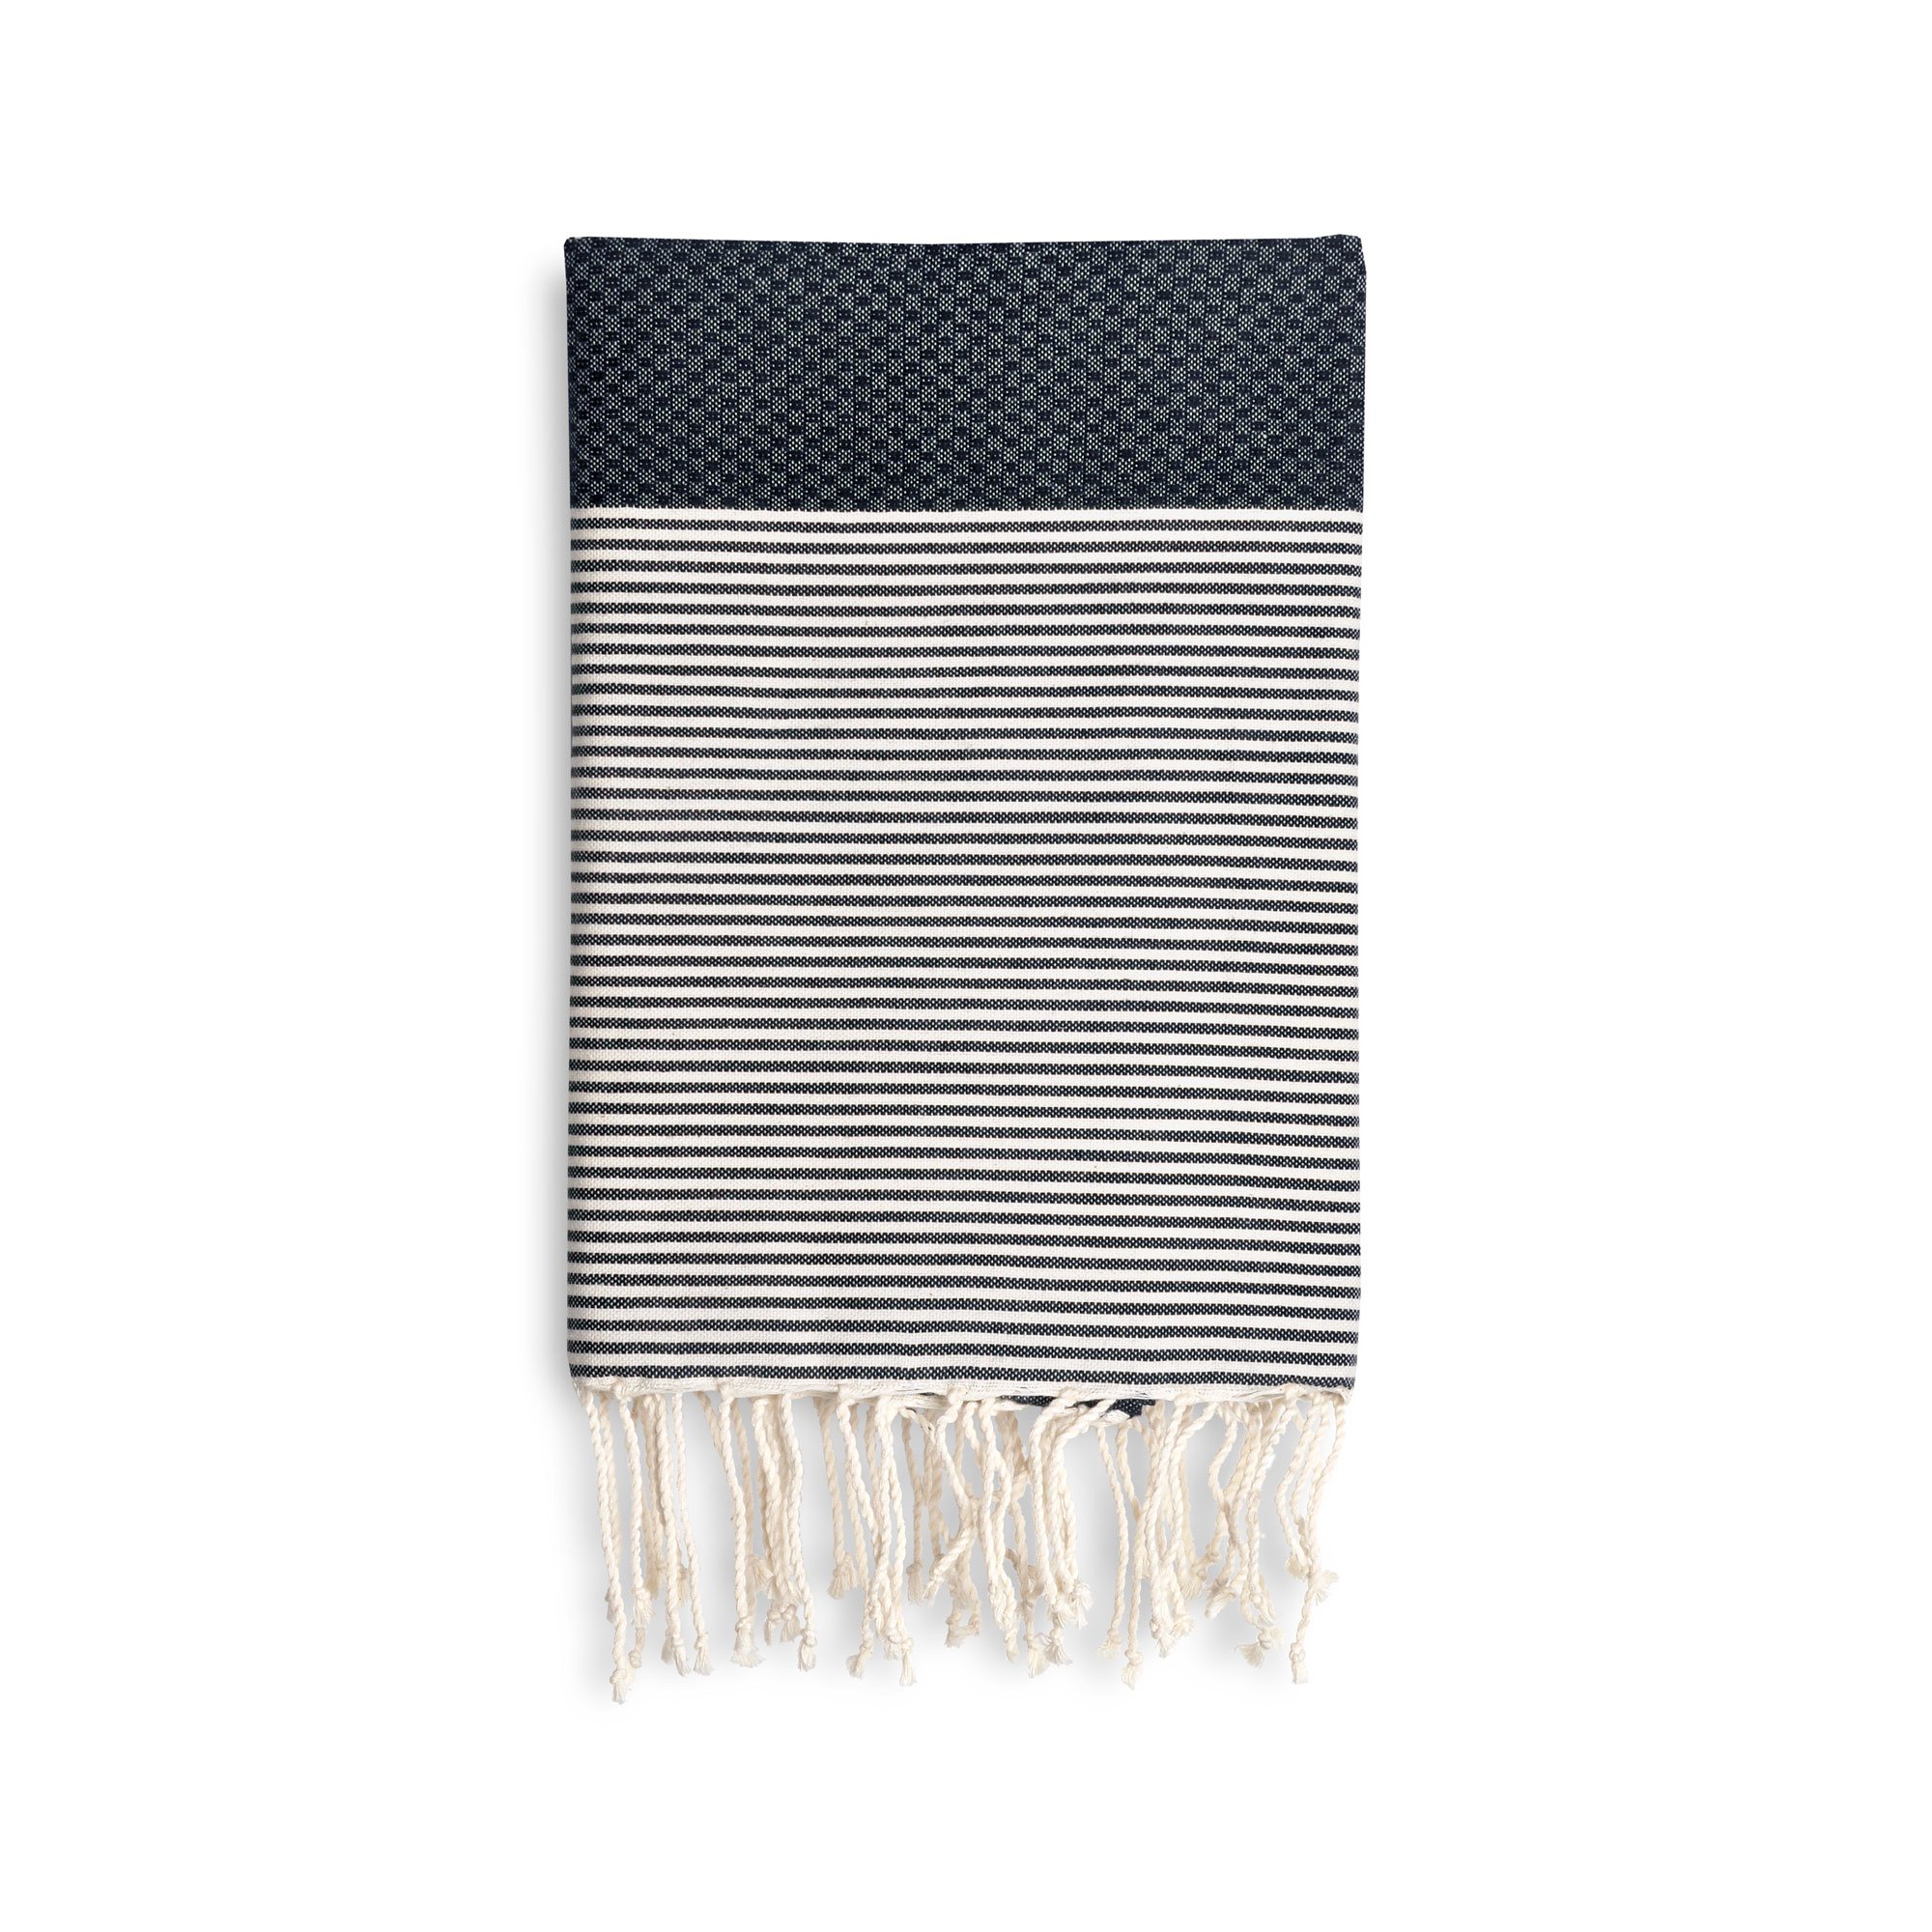 Cool-Fouta Hammam Towel Black Honeycomb Fouta With Raw Cotton Stripes